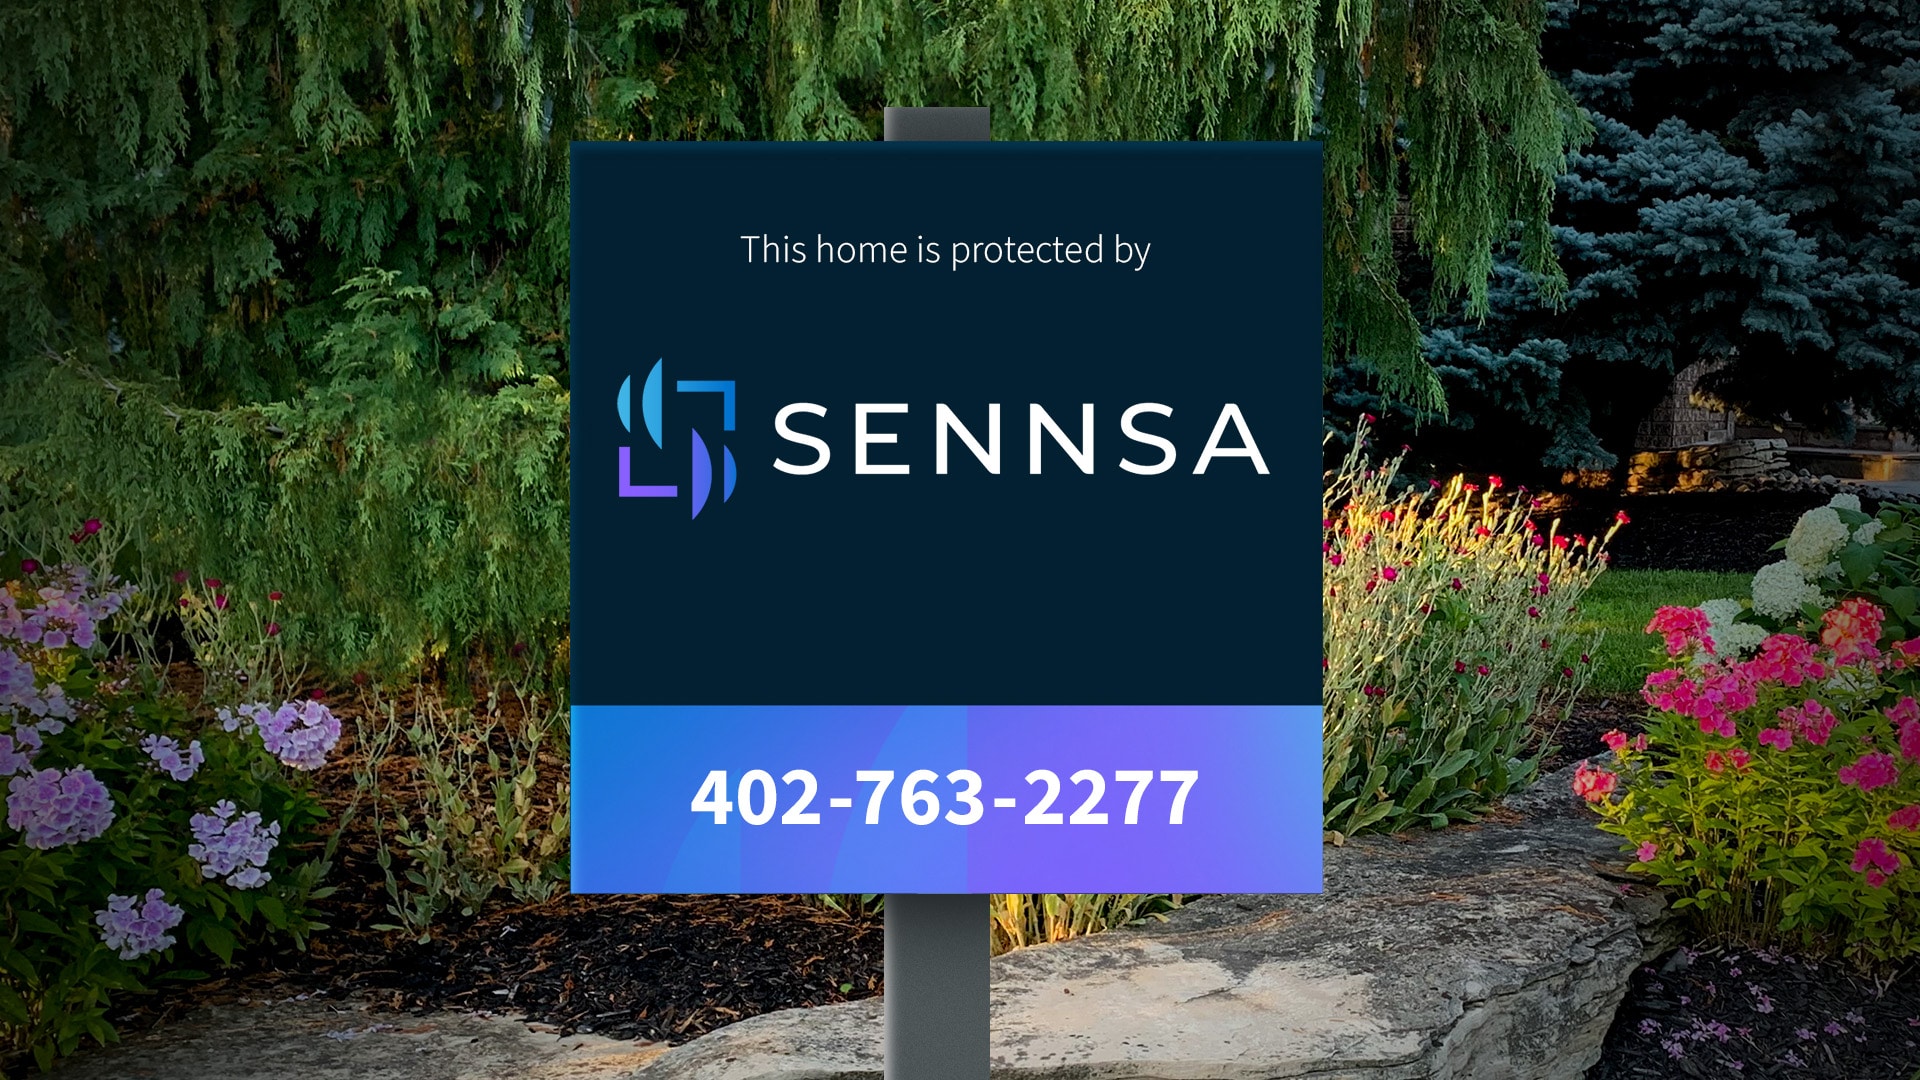 sennsa branding omaha: home security signage example